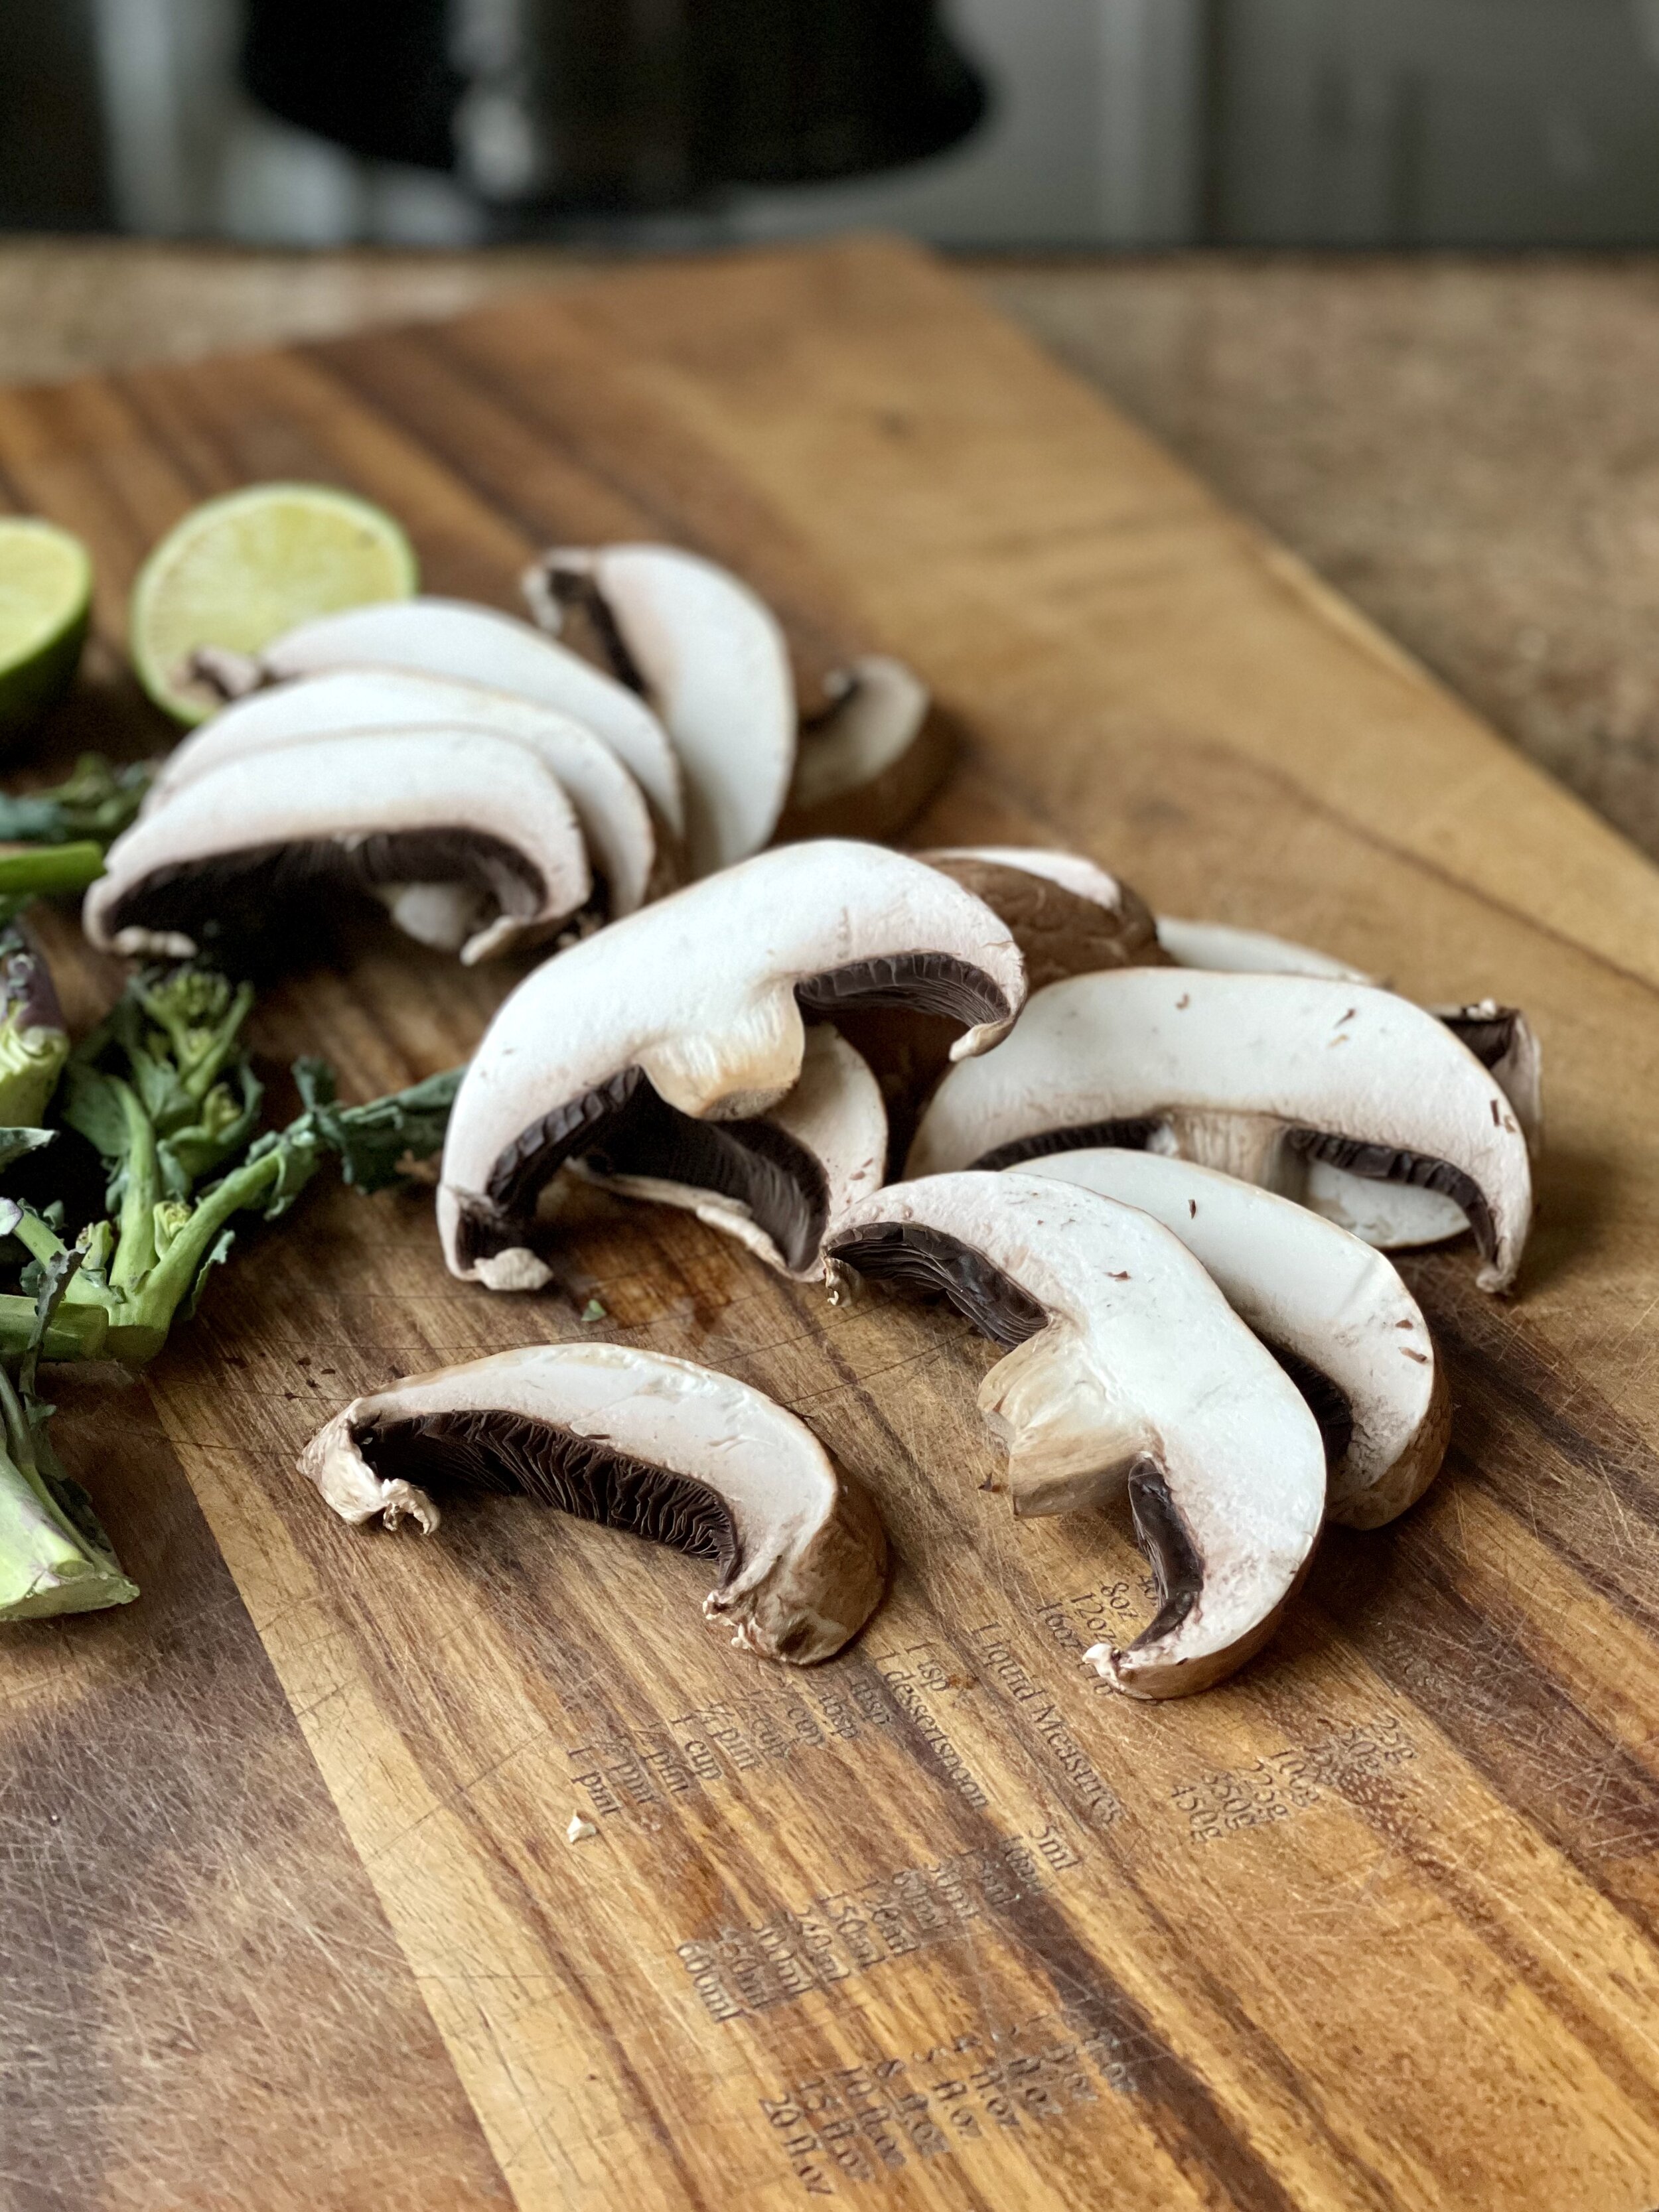 Chopped portobello mushrooms